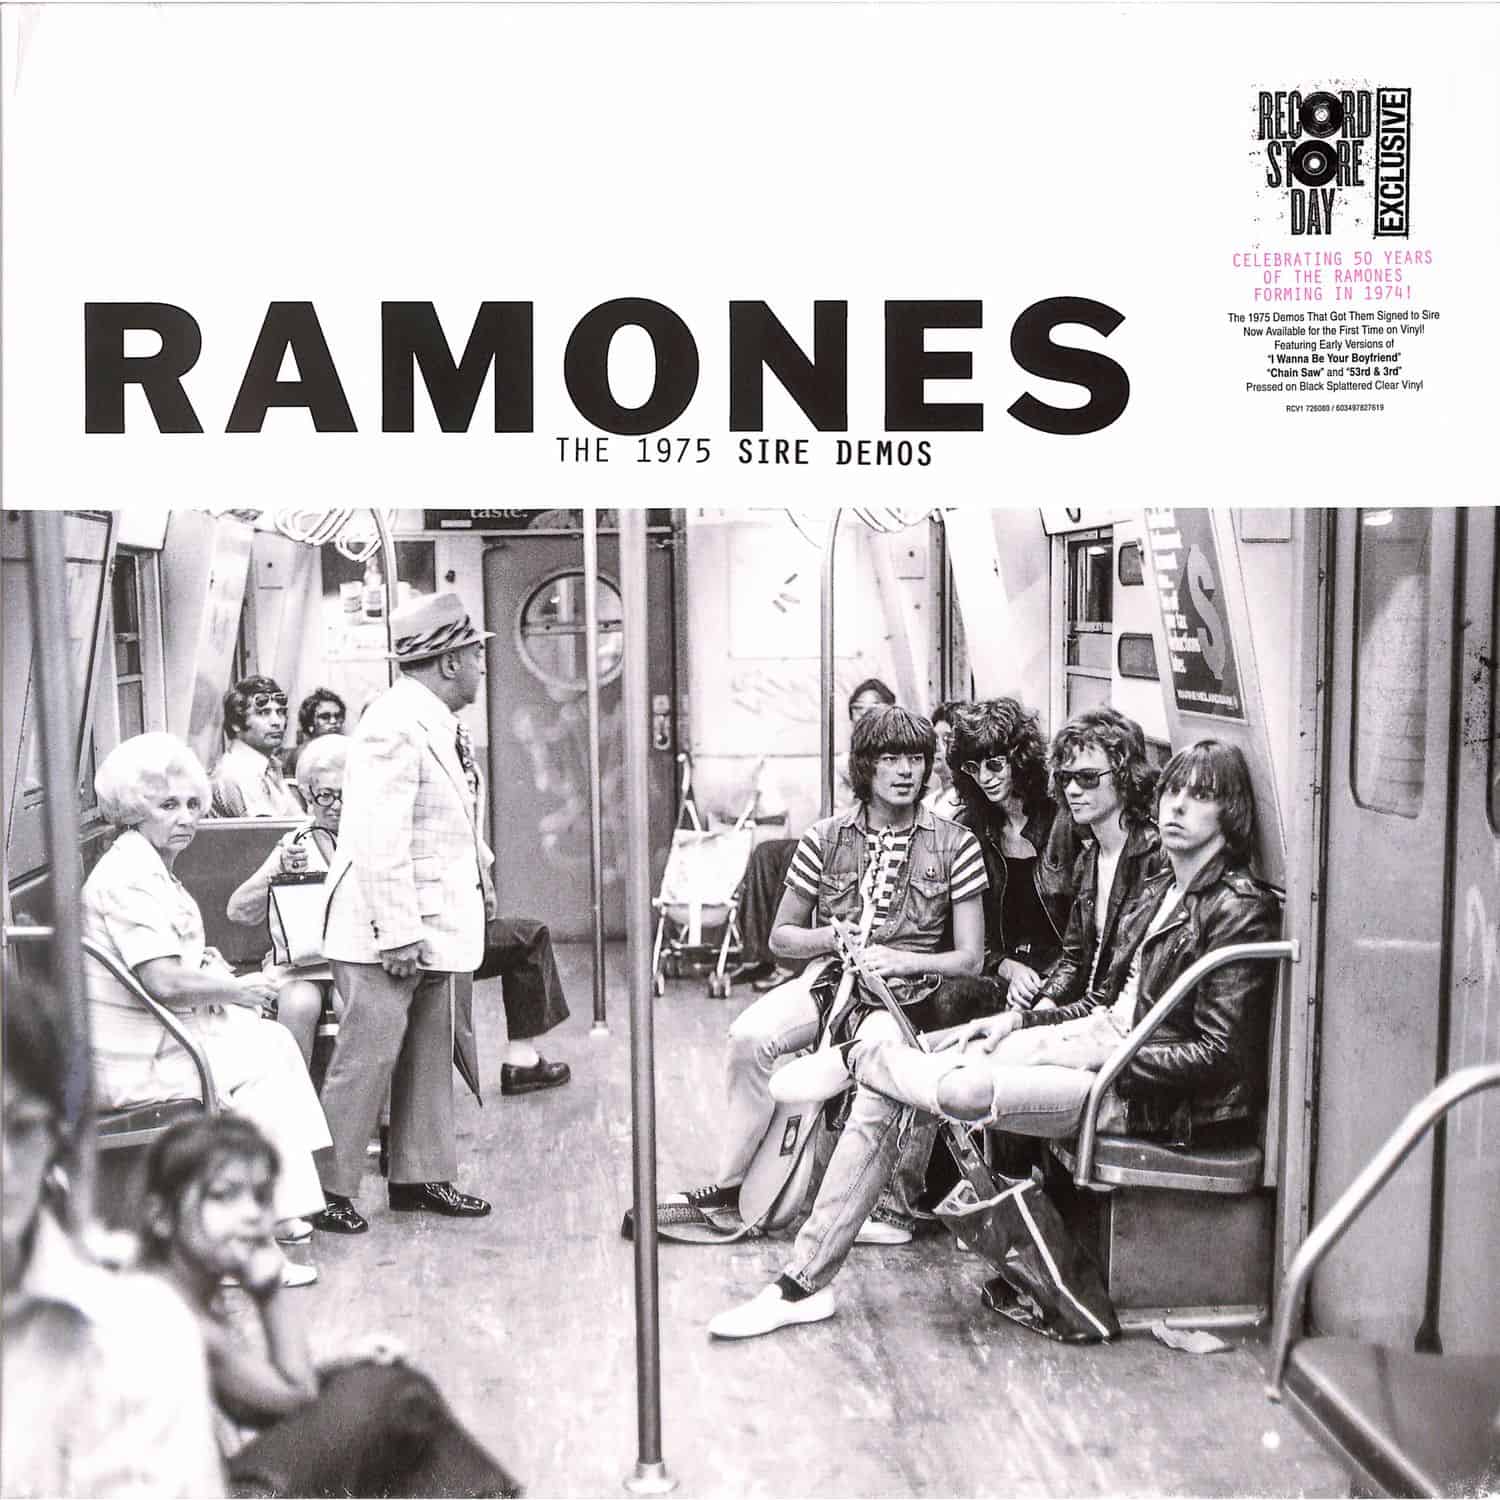 Ramones - THE 1975 SIRE DEMOS 